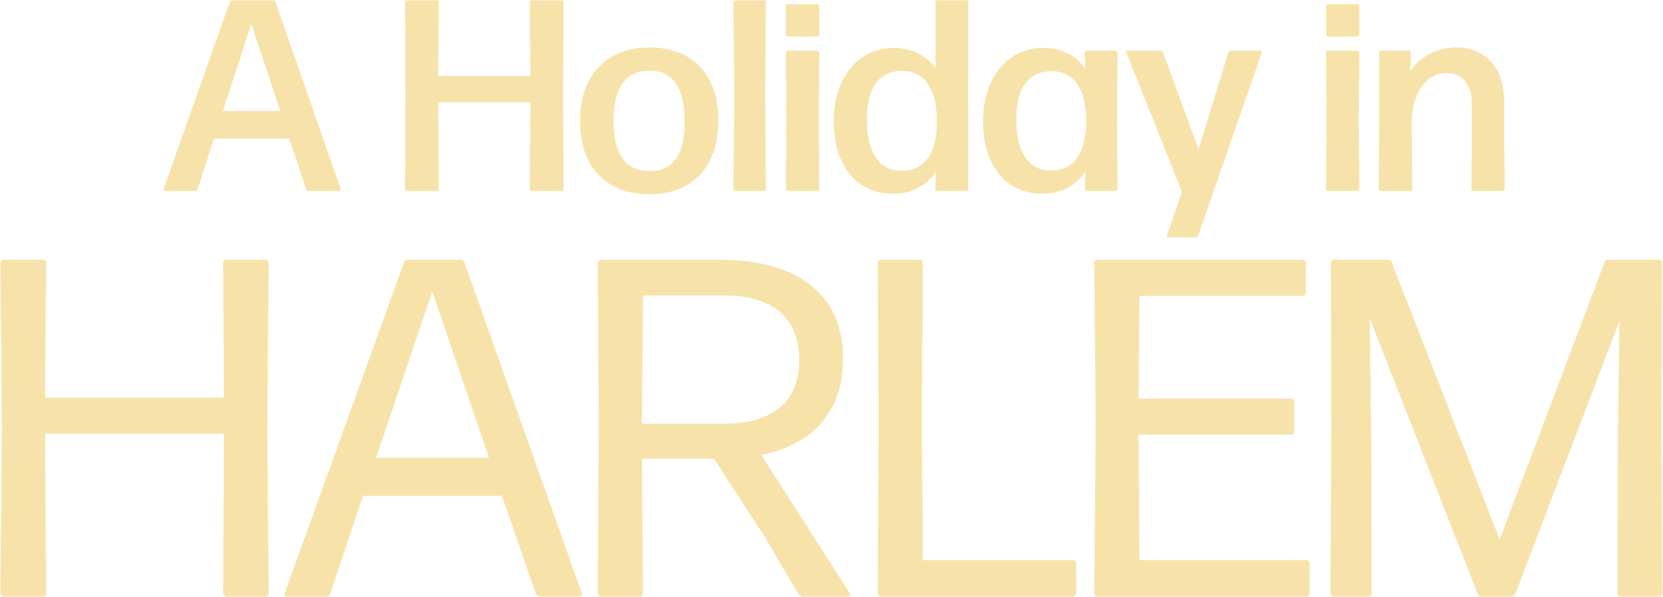 A Holiday in Harlem logo